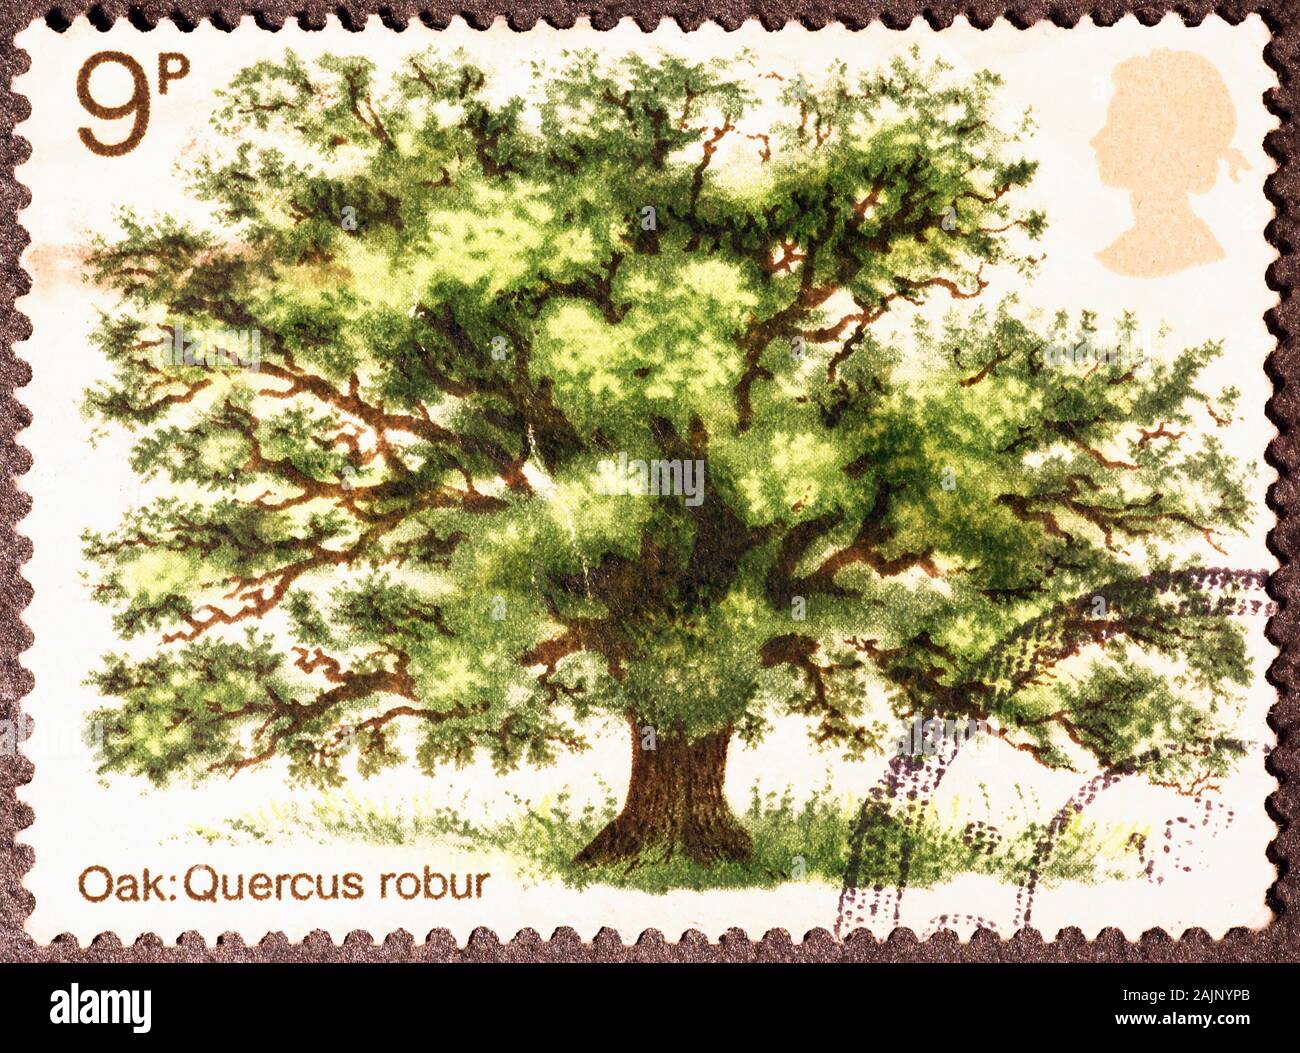 Oak on british postage stamp Stock Photo